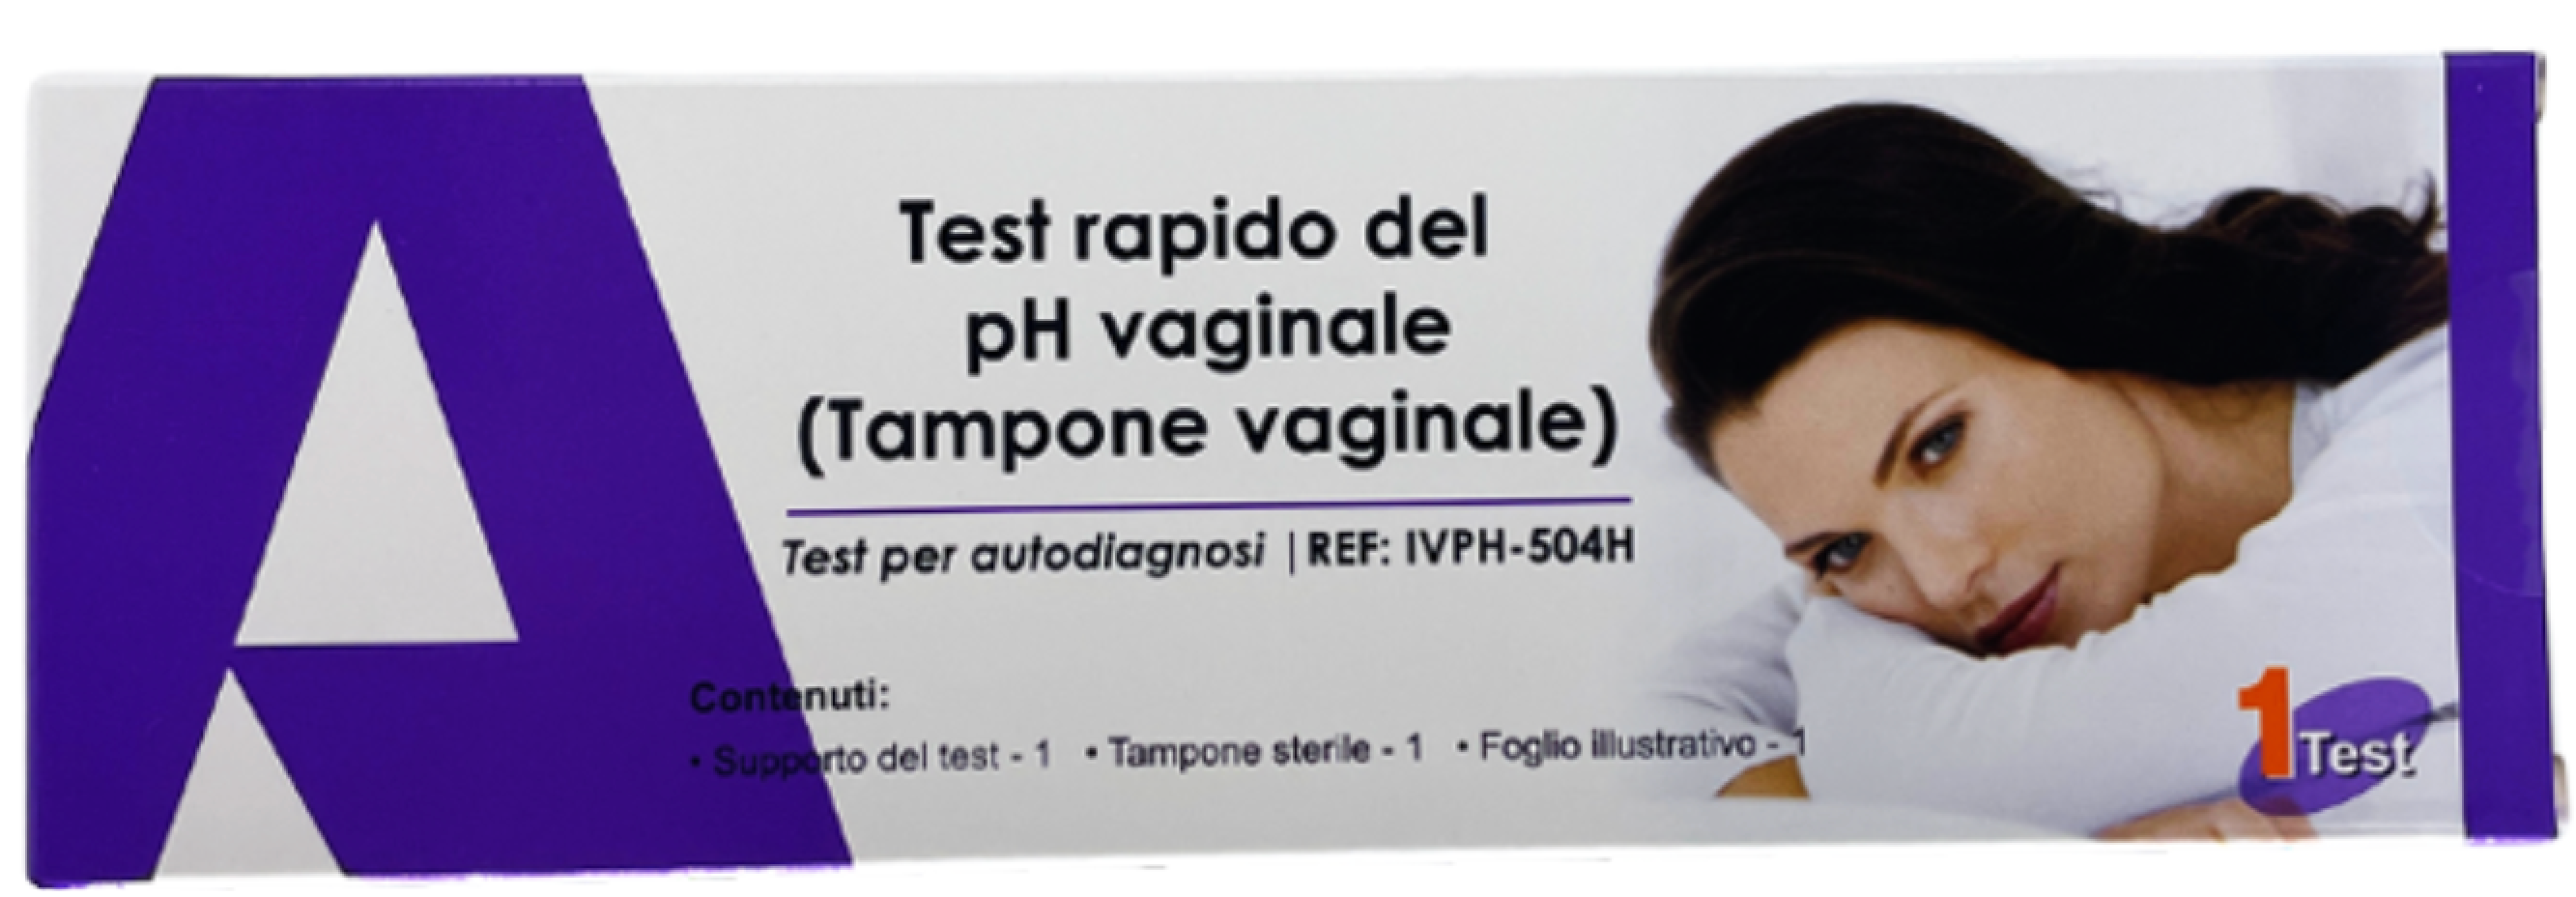 Self test rapido ph vaginale